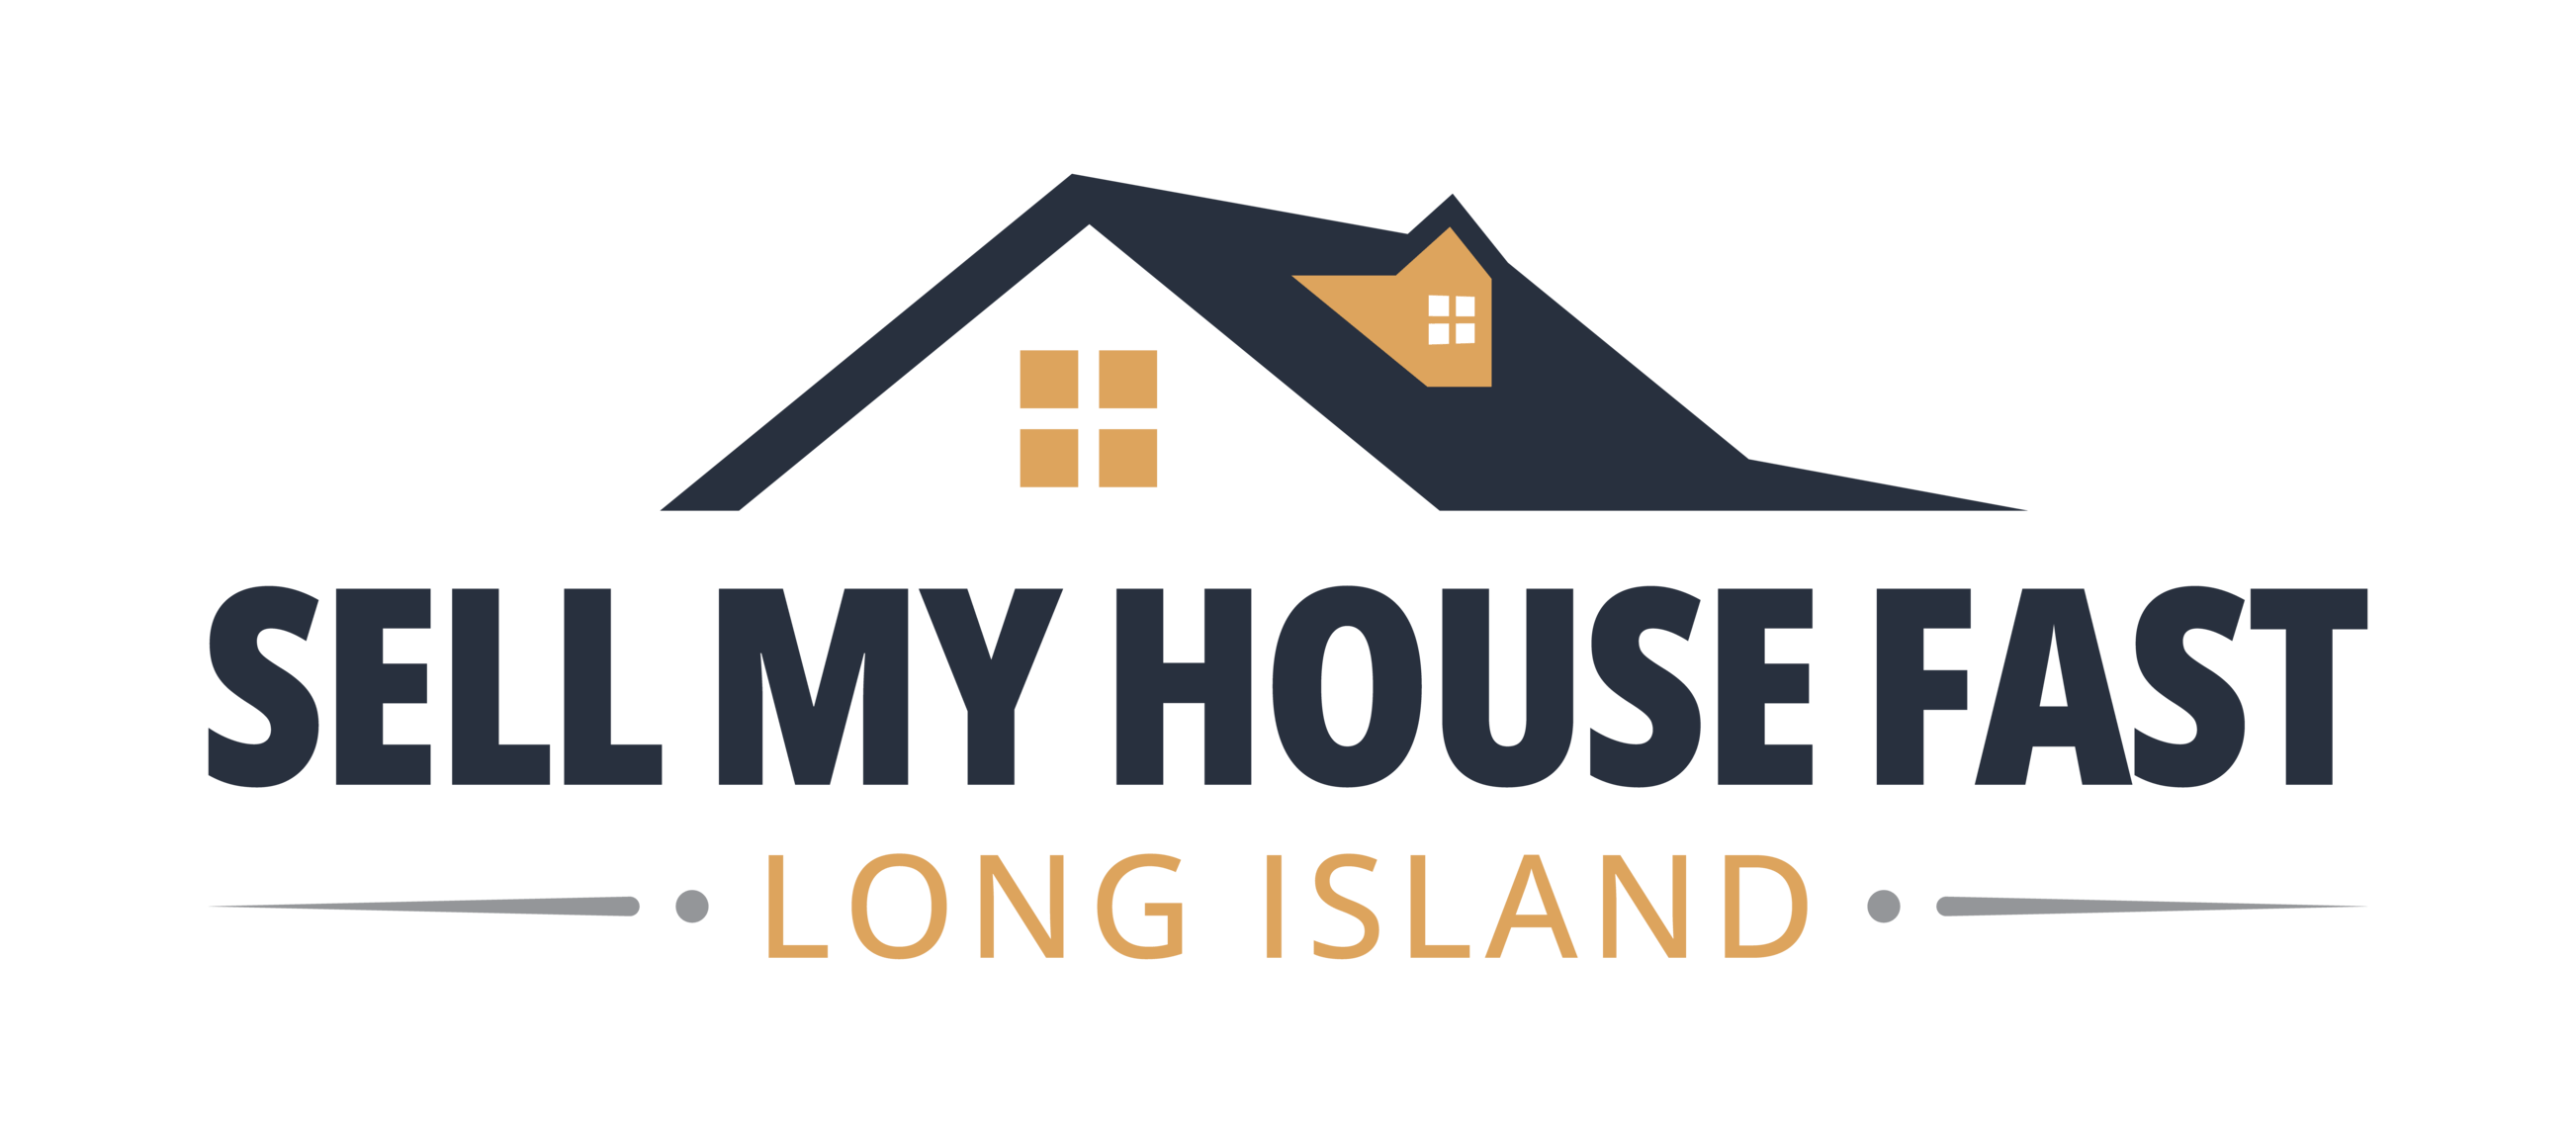 Sell My House Fast Long Island logo